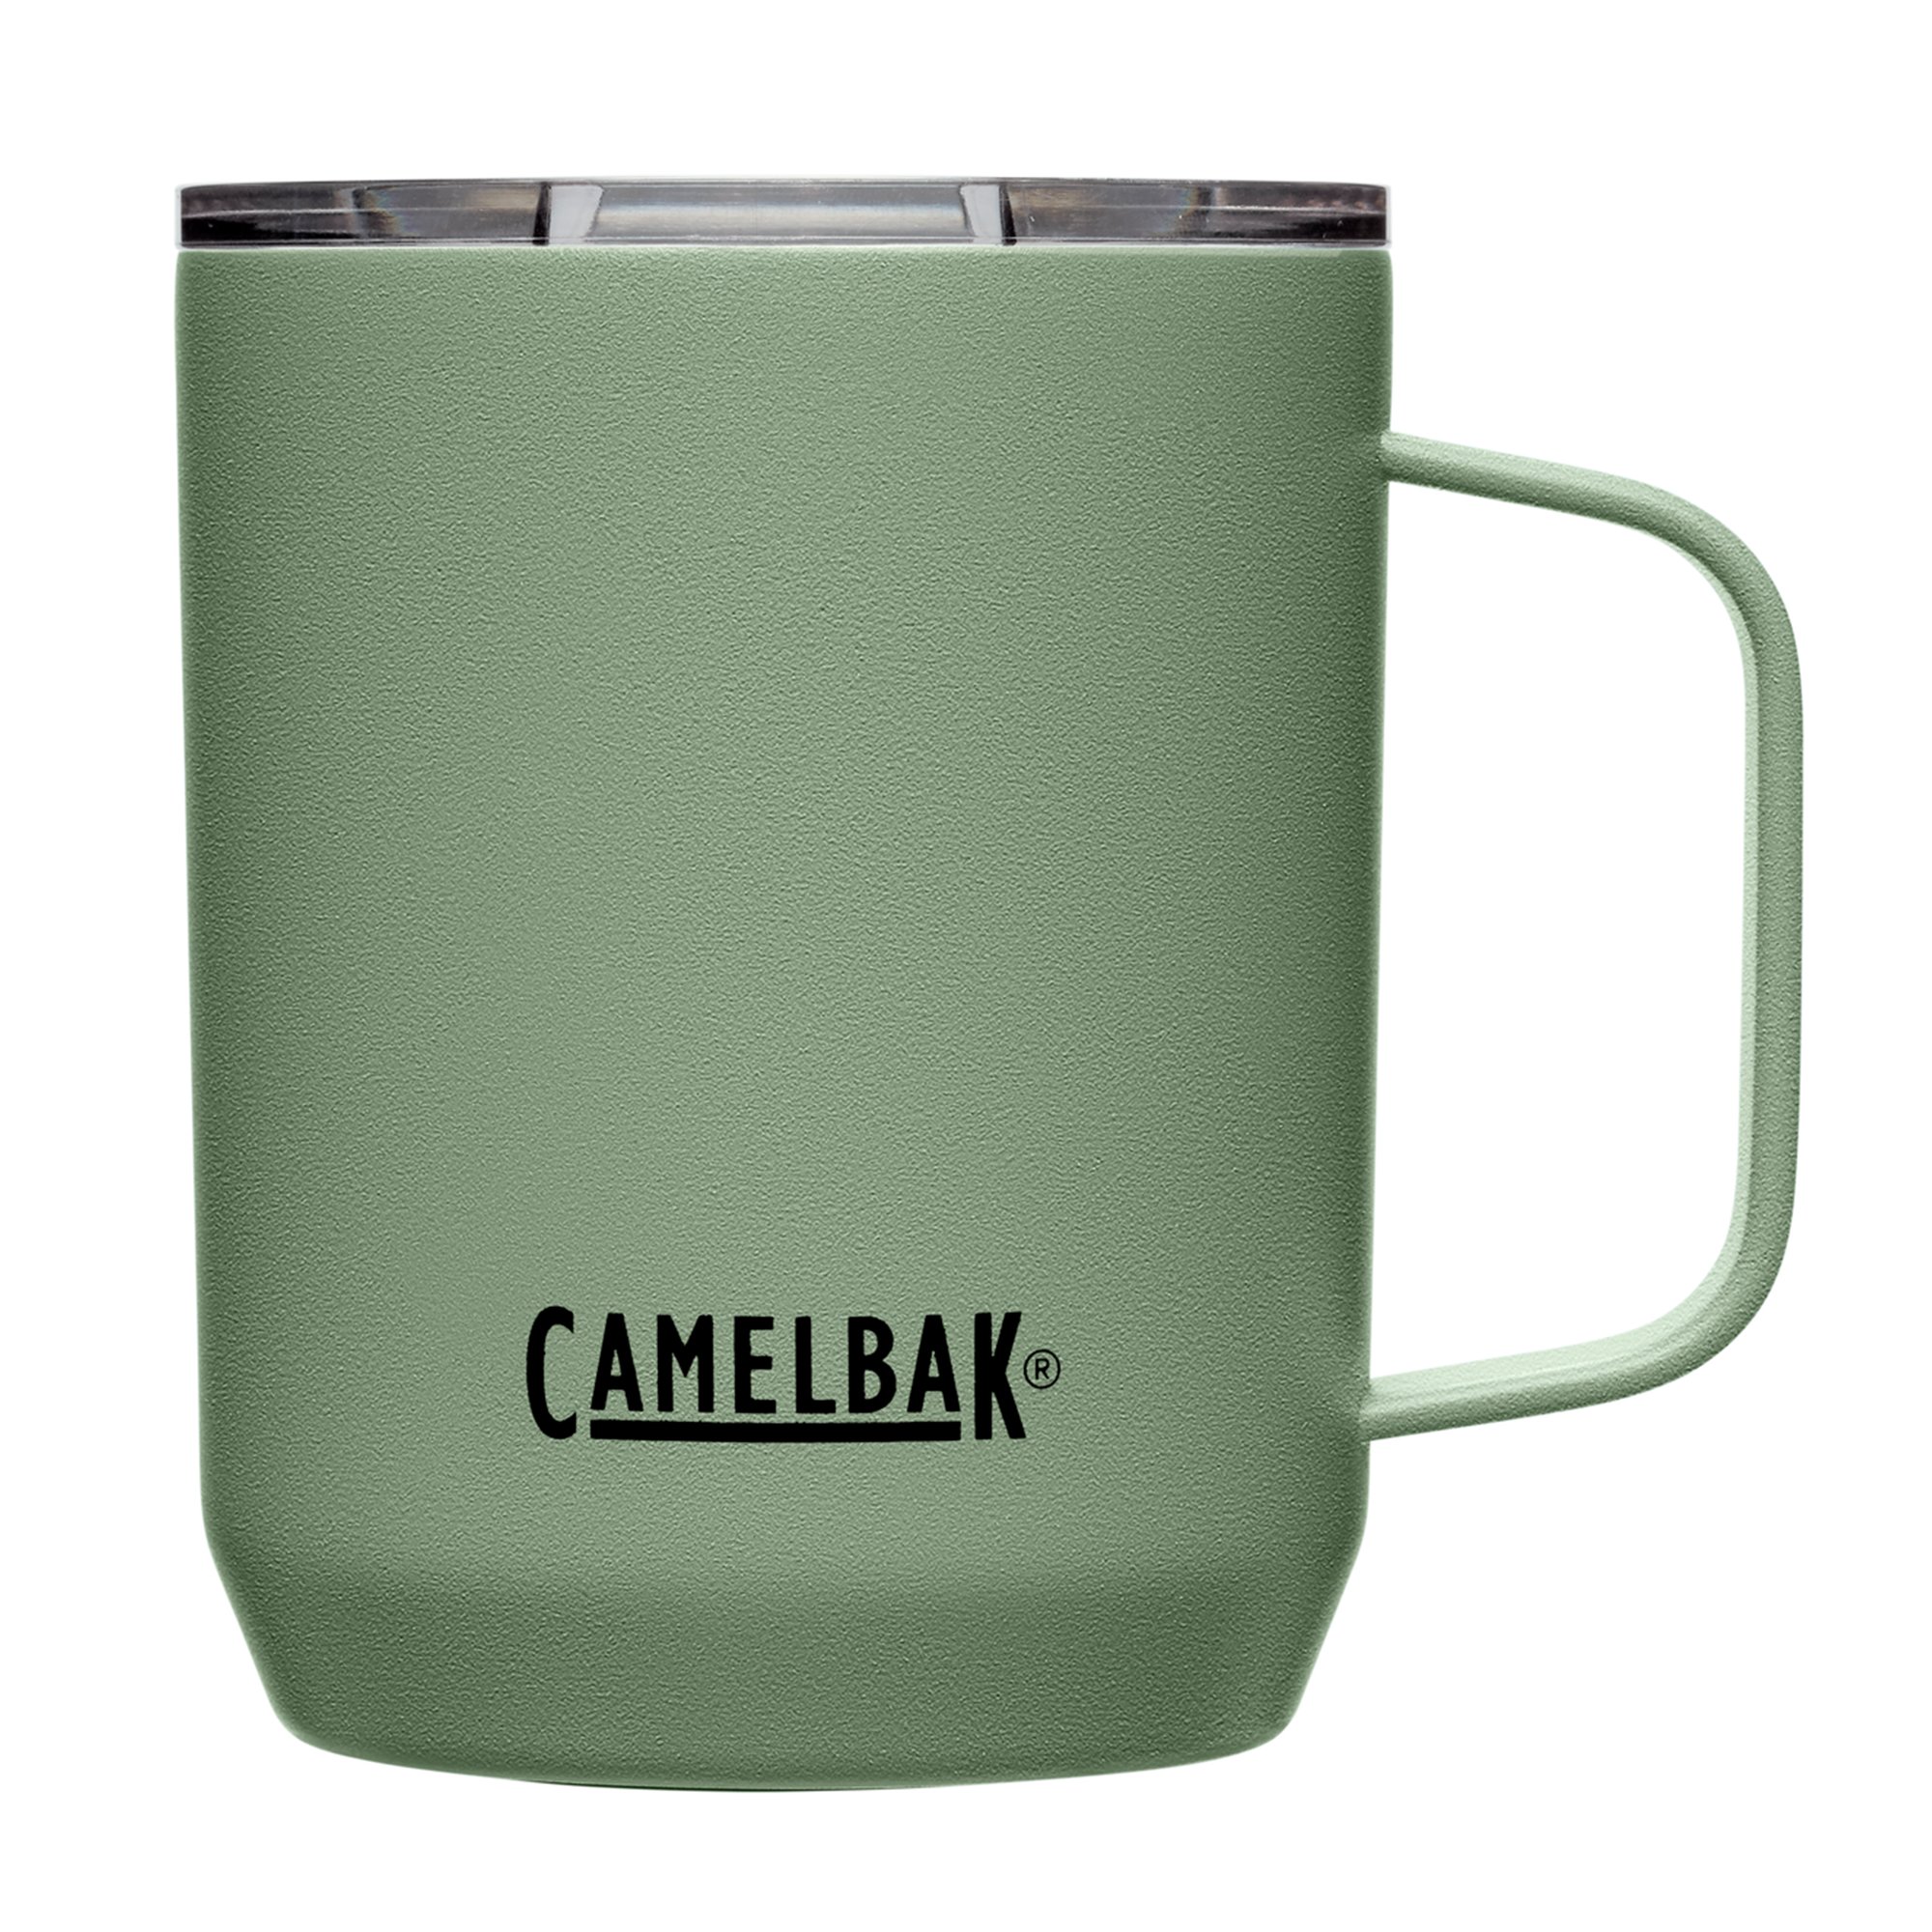 Camelbak Termosmugg 0,35 liter moss